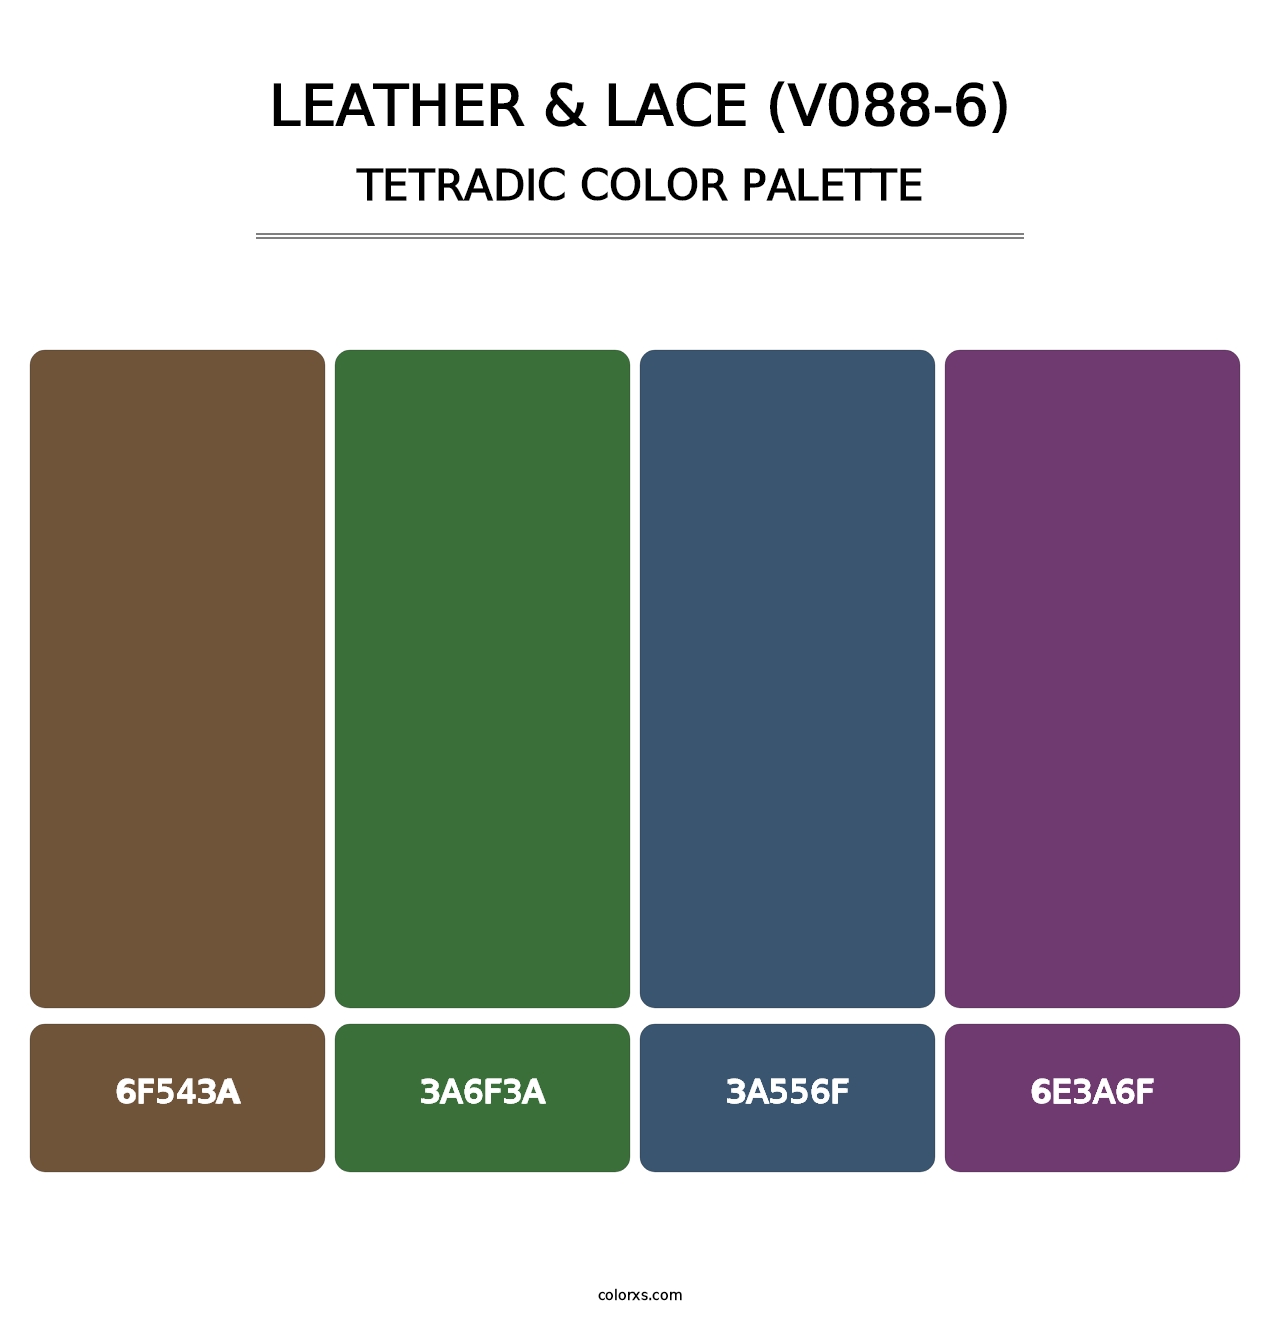 Leather & Lace (V088-6) - Tetradic Color Palette